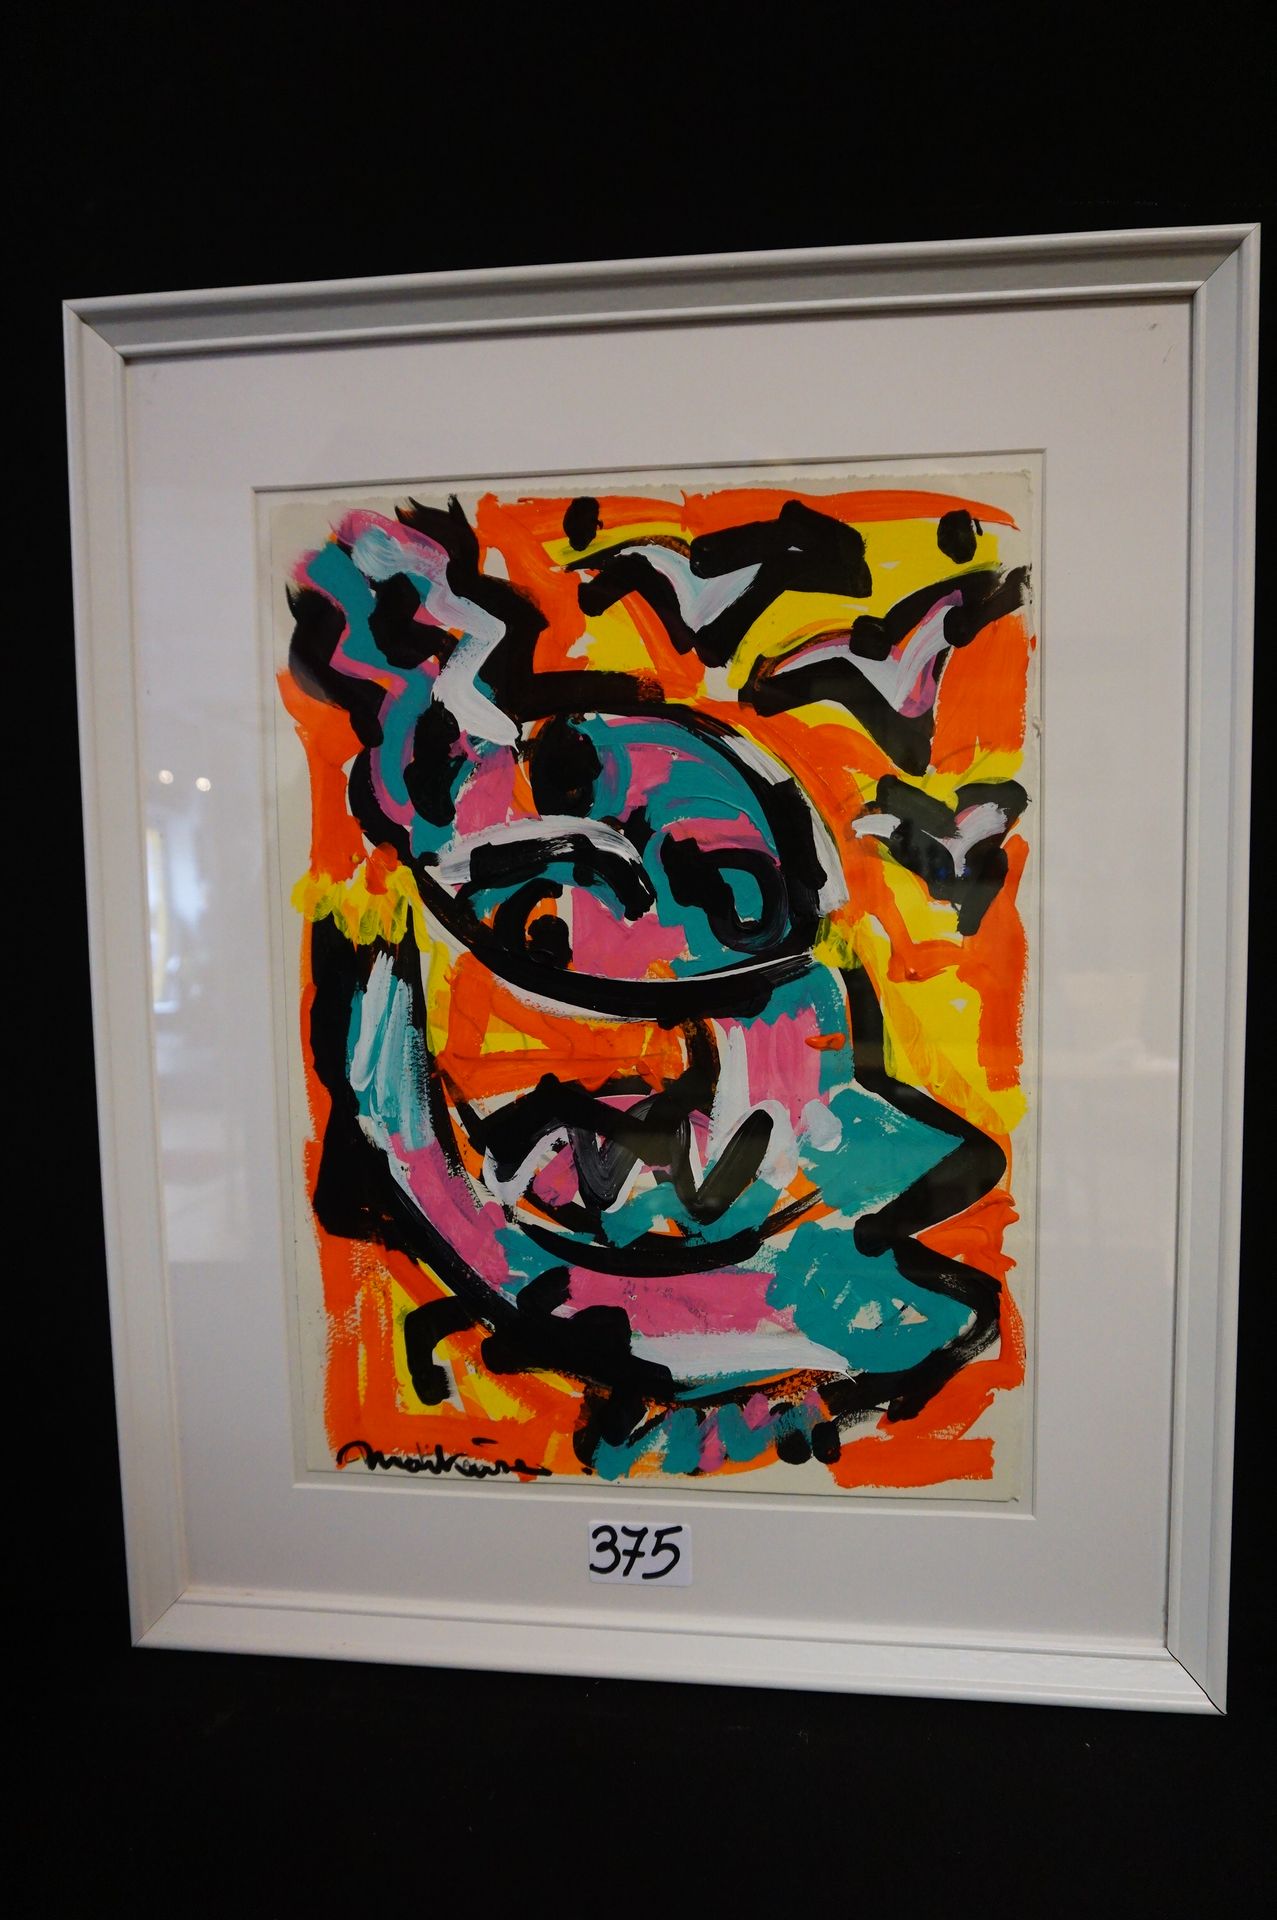 LUC MARTINSEN (1951 - ) "Moderne Komposition" - Acryl - Signiert - 37 x 27 cm